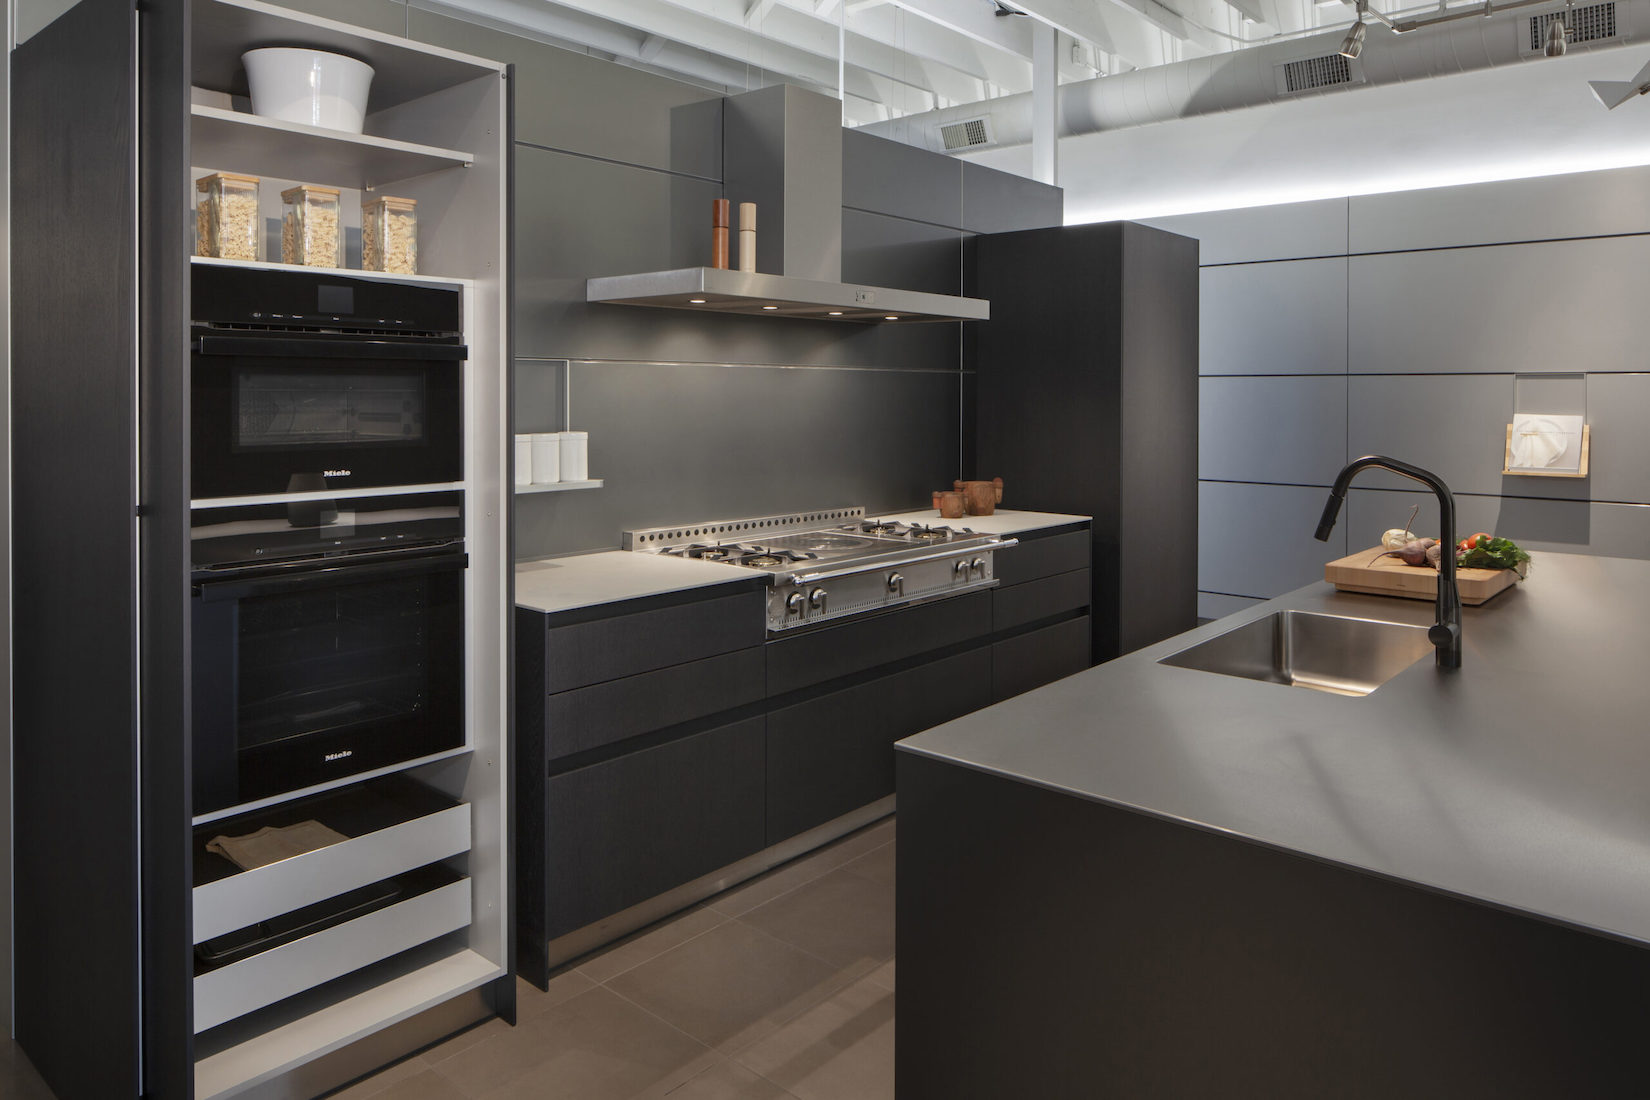 bulthaup luxury kitchen showroom